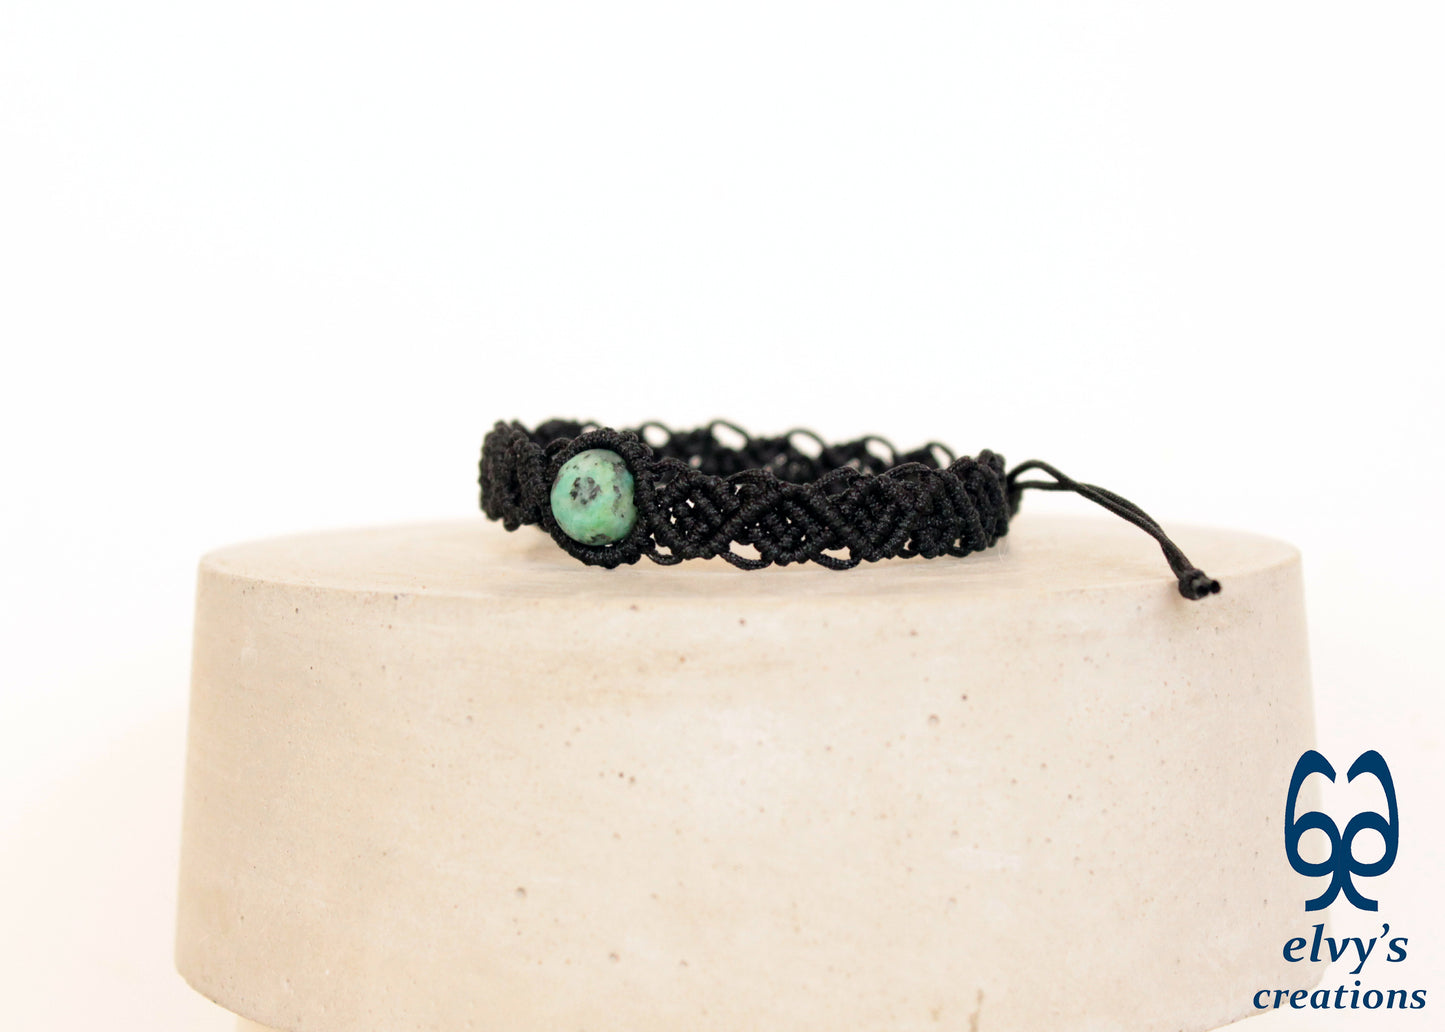 Black Macrame Cuff Bracelet With Turquoise Gemstones Beaded Adjustable Bracelet for Women